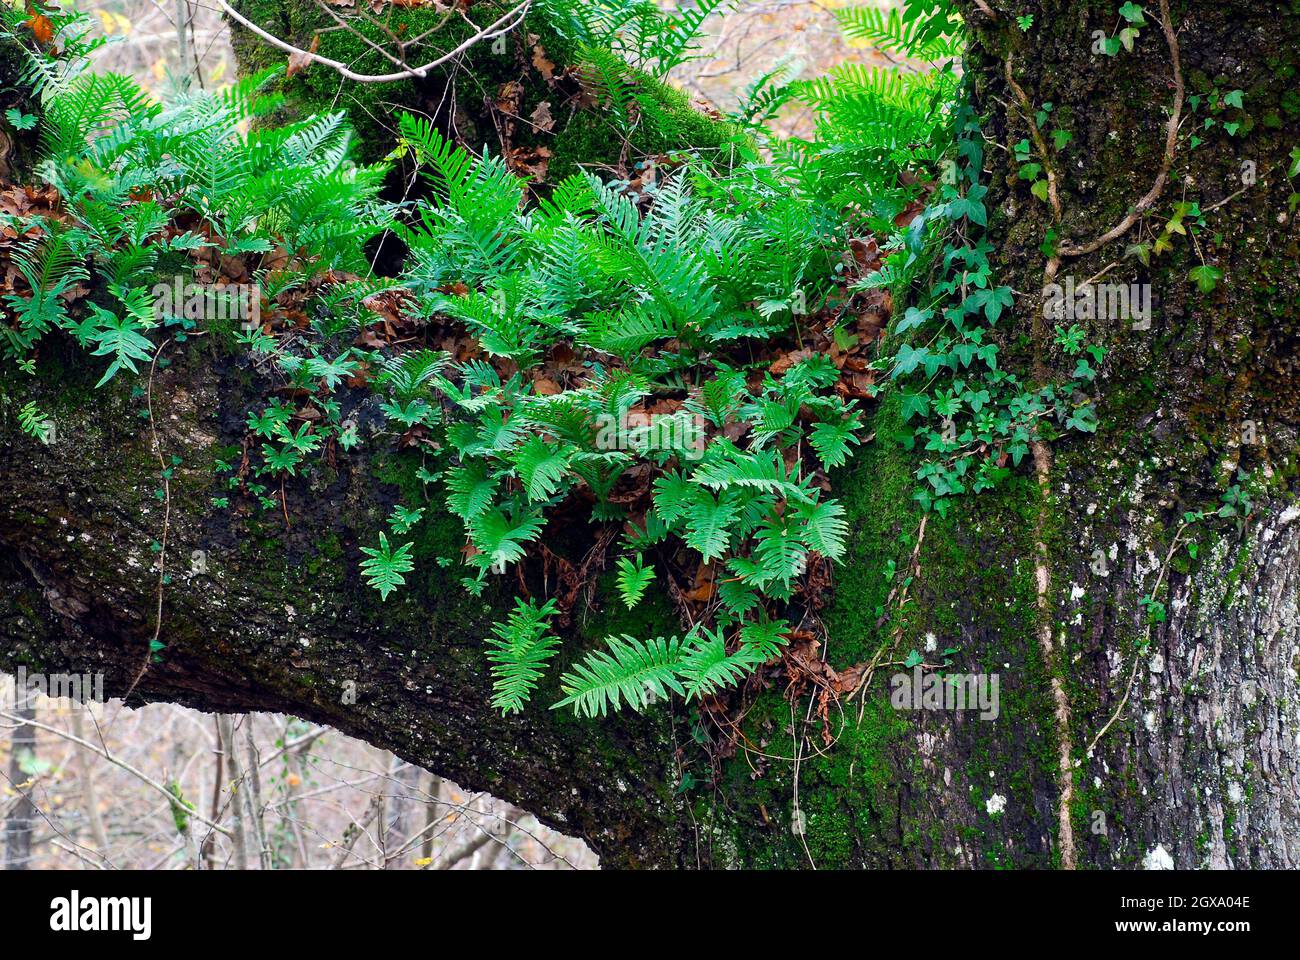 The southern polypodium fern (Polypodium cambricum) on a tree trunk Stock Photo